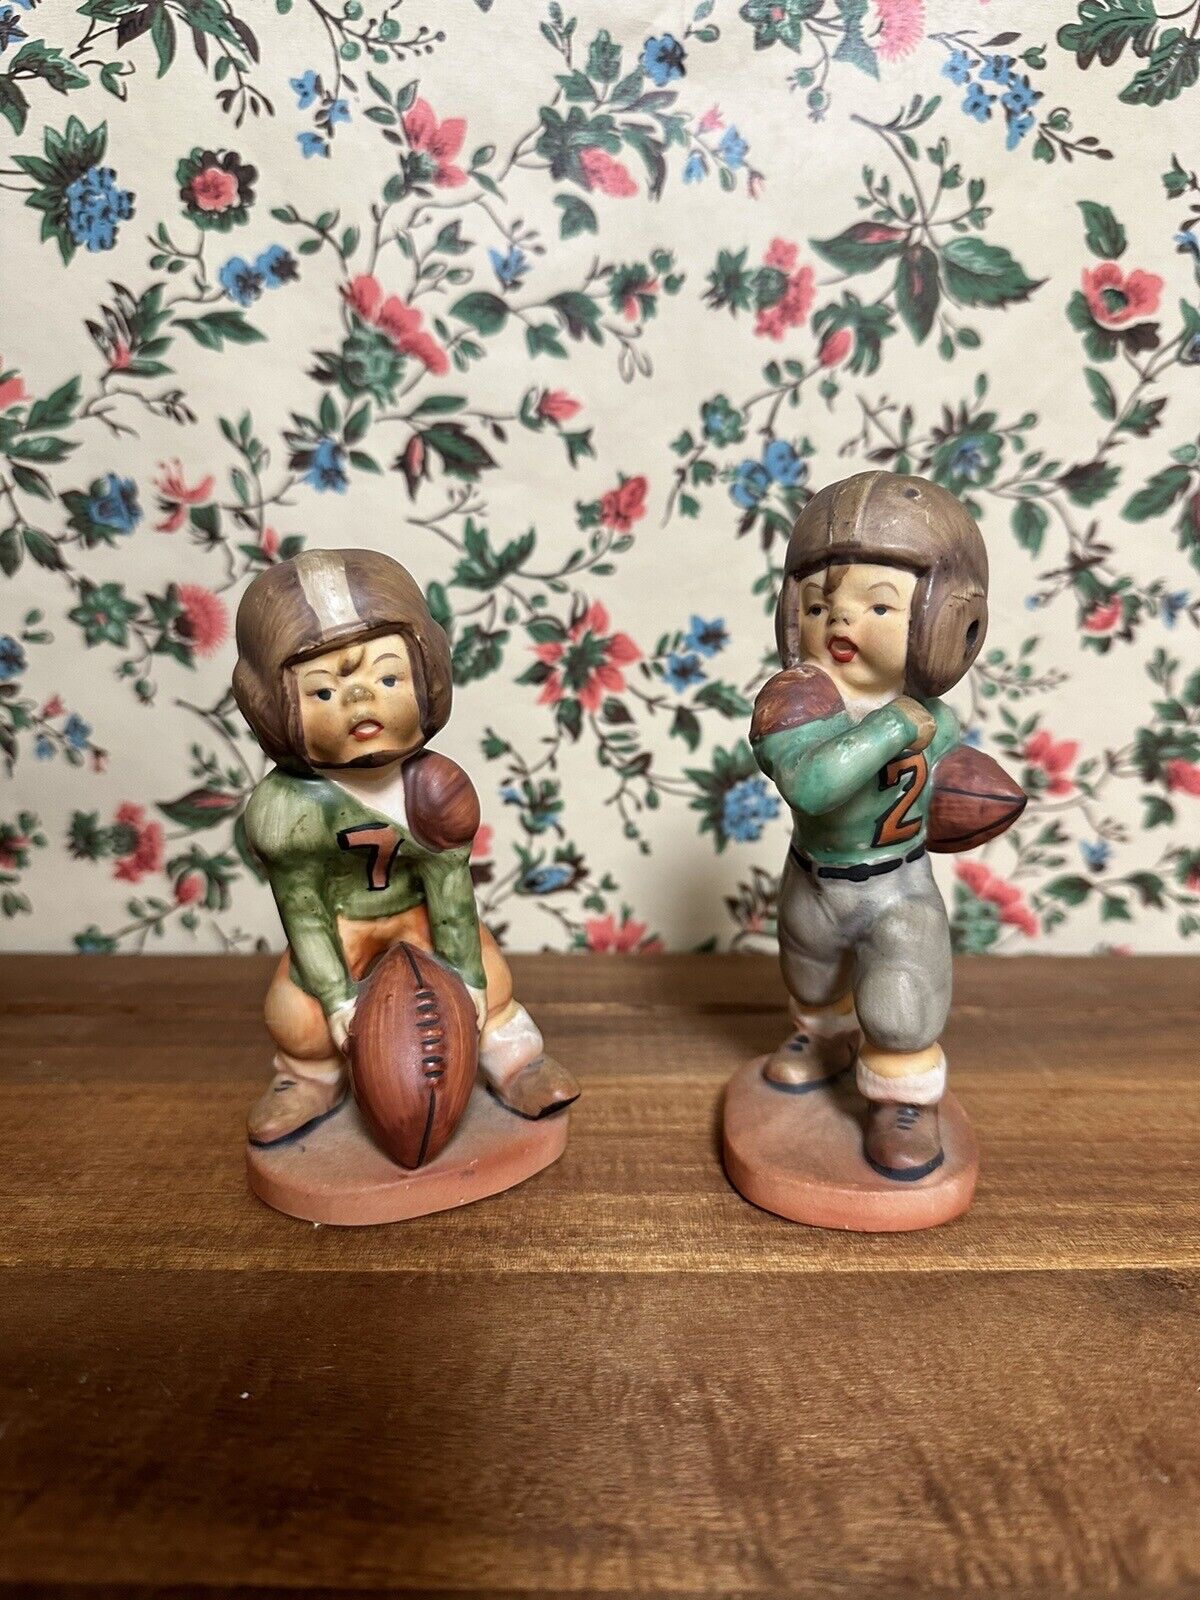 Vintage Made In Japan Ceramic Football Players Figurines Set Of 2 Boys, Maruri